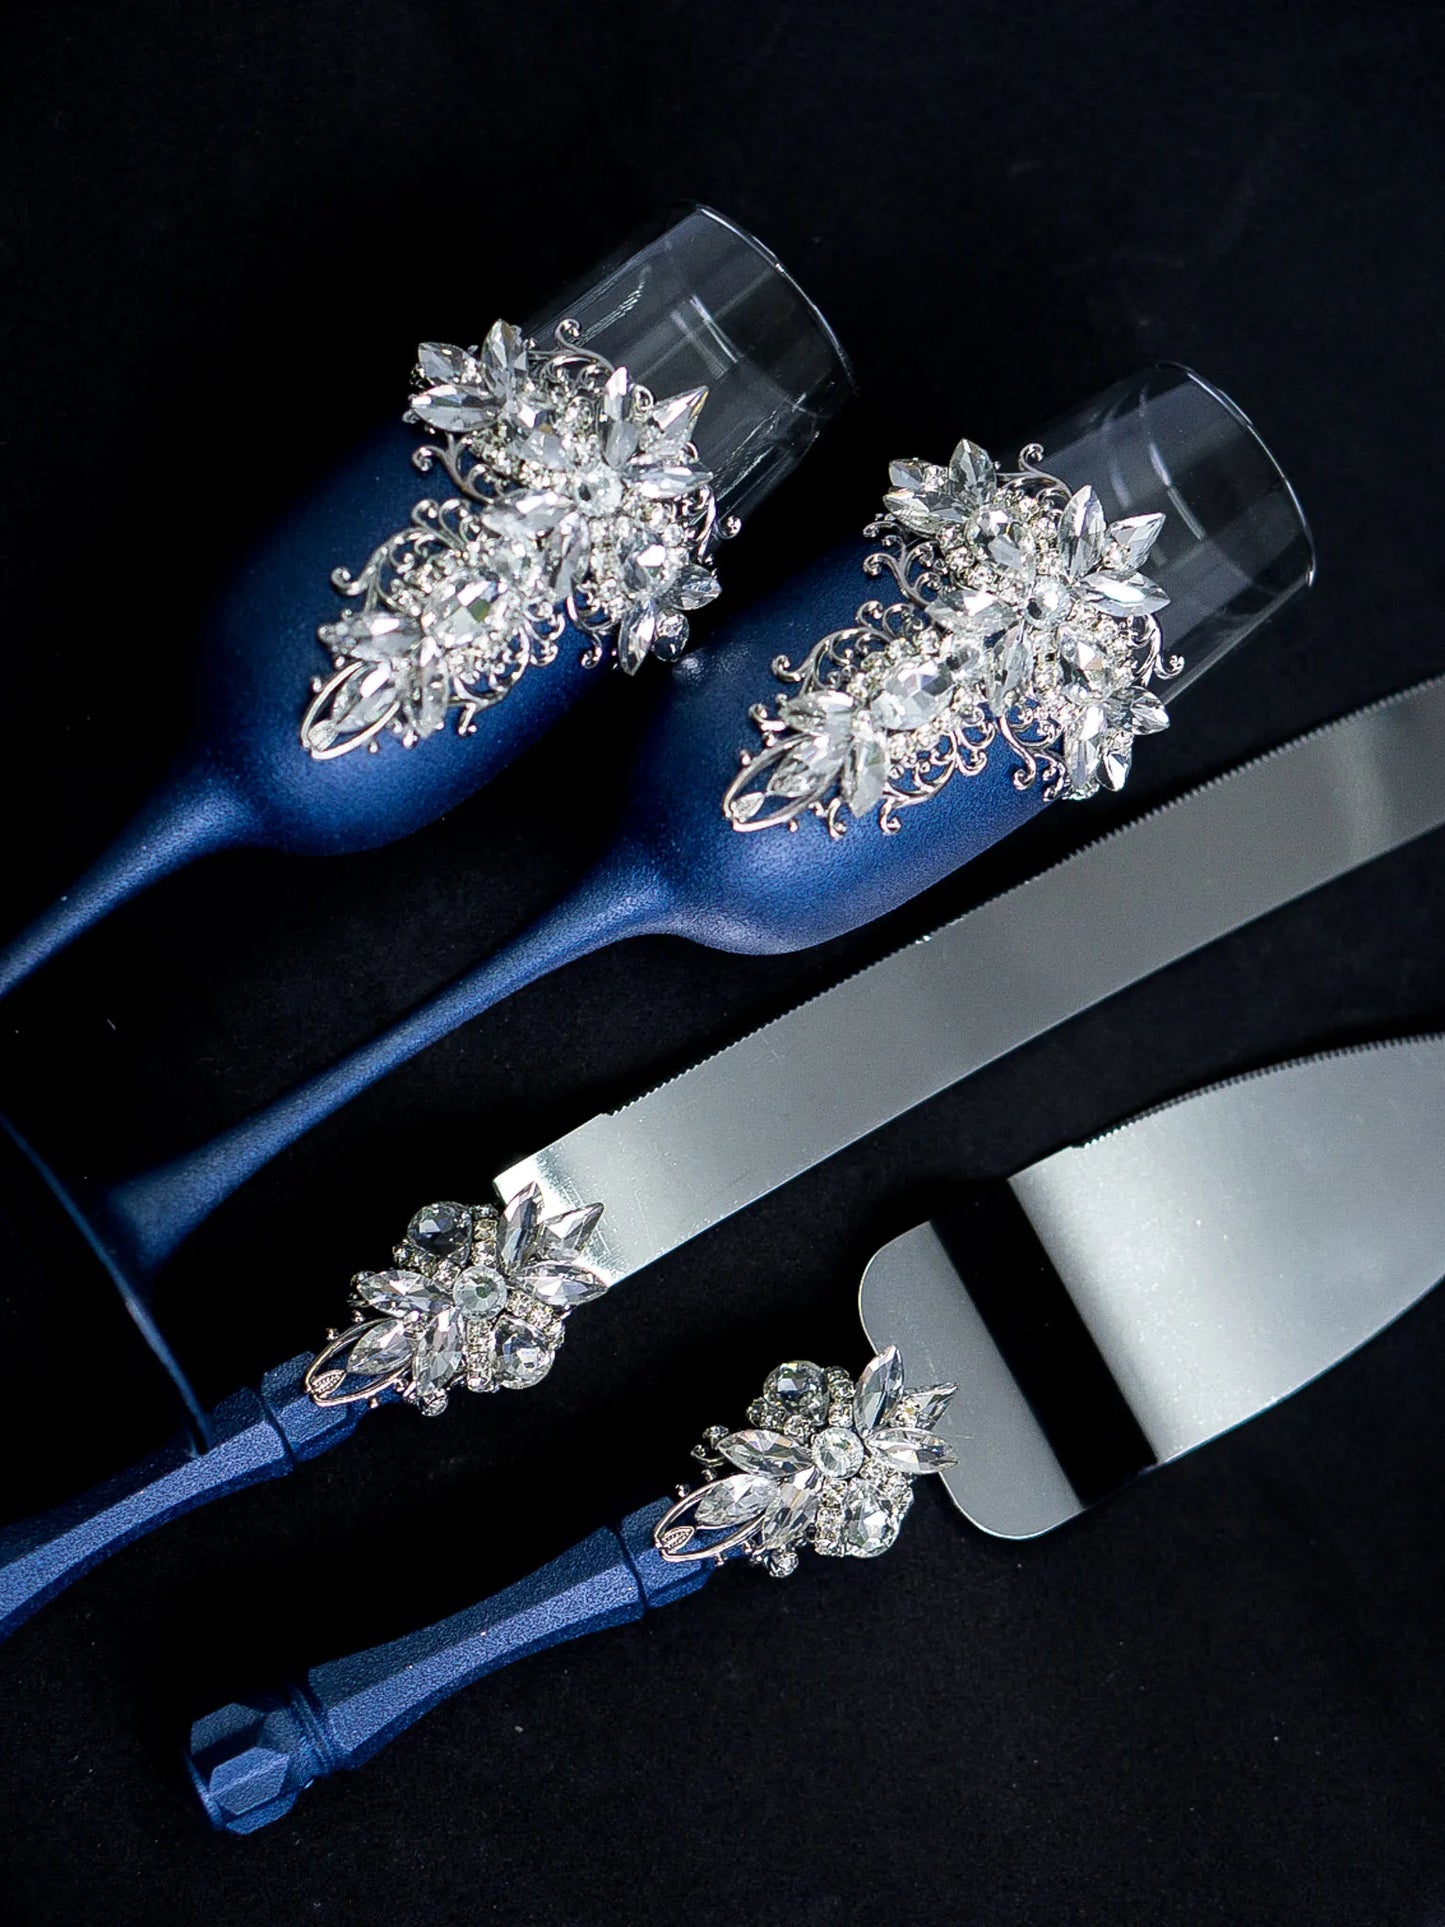 Personalized wedding cake utensils with filigree